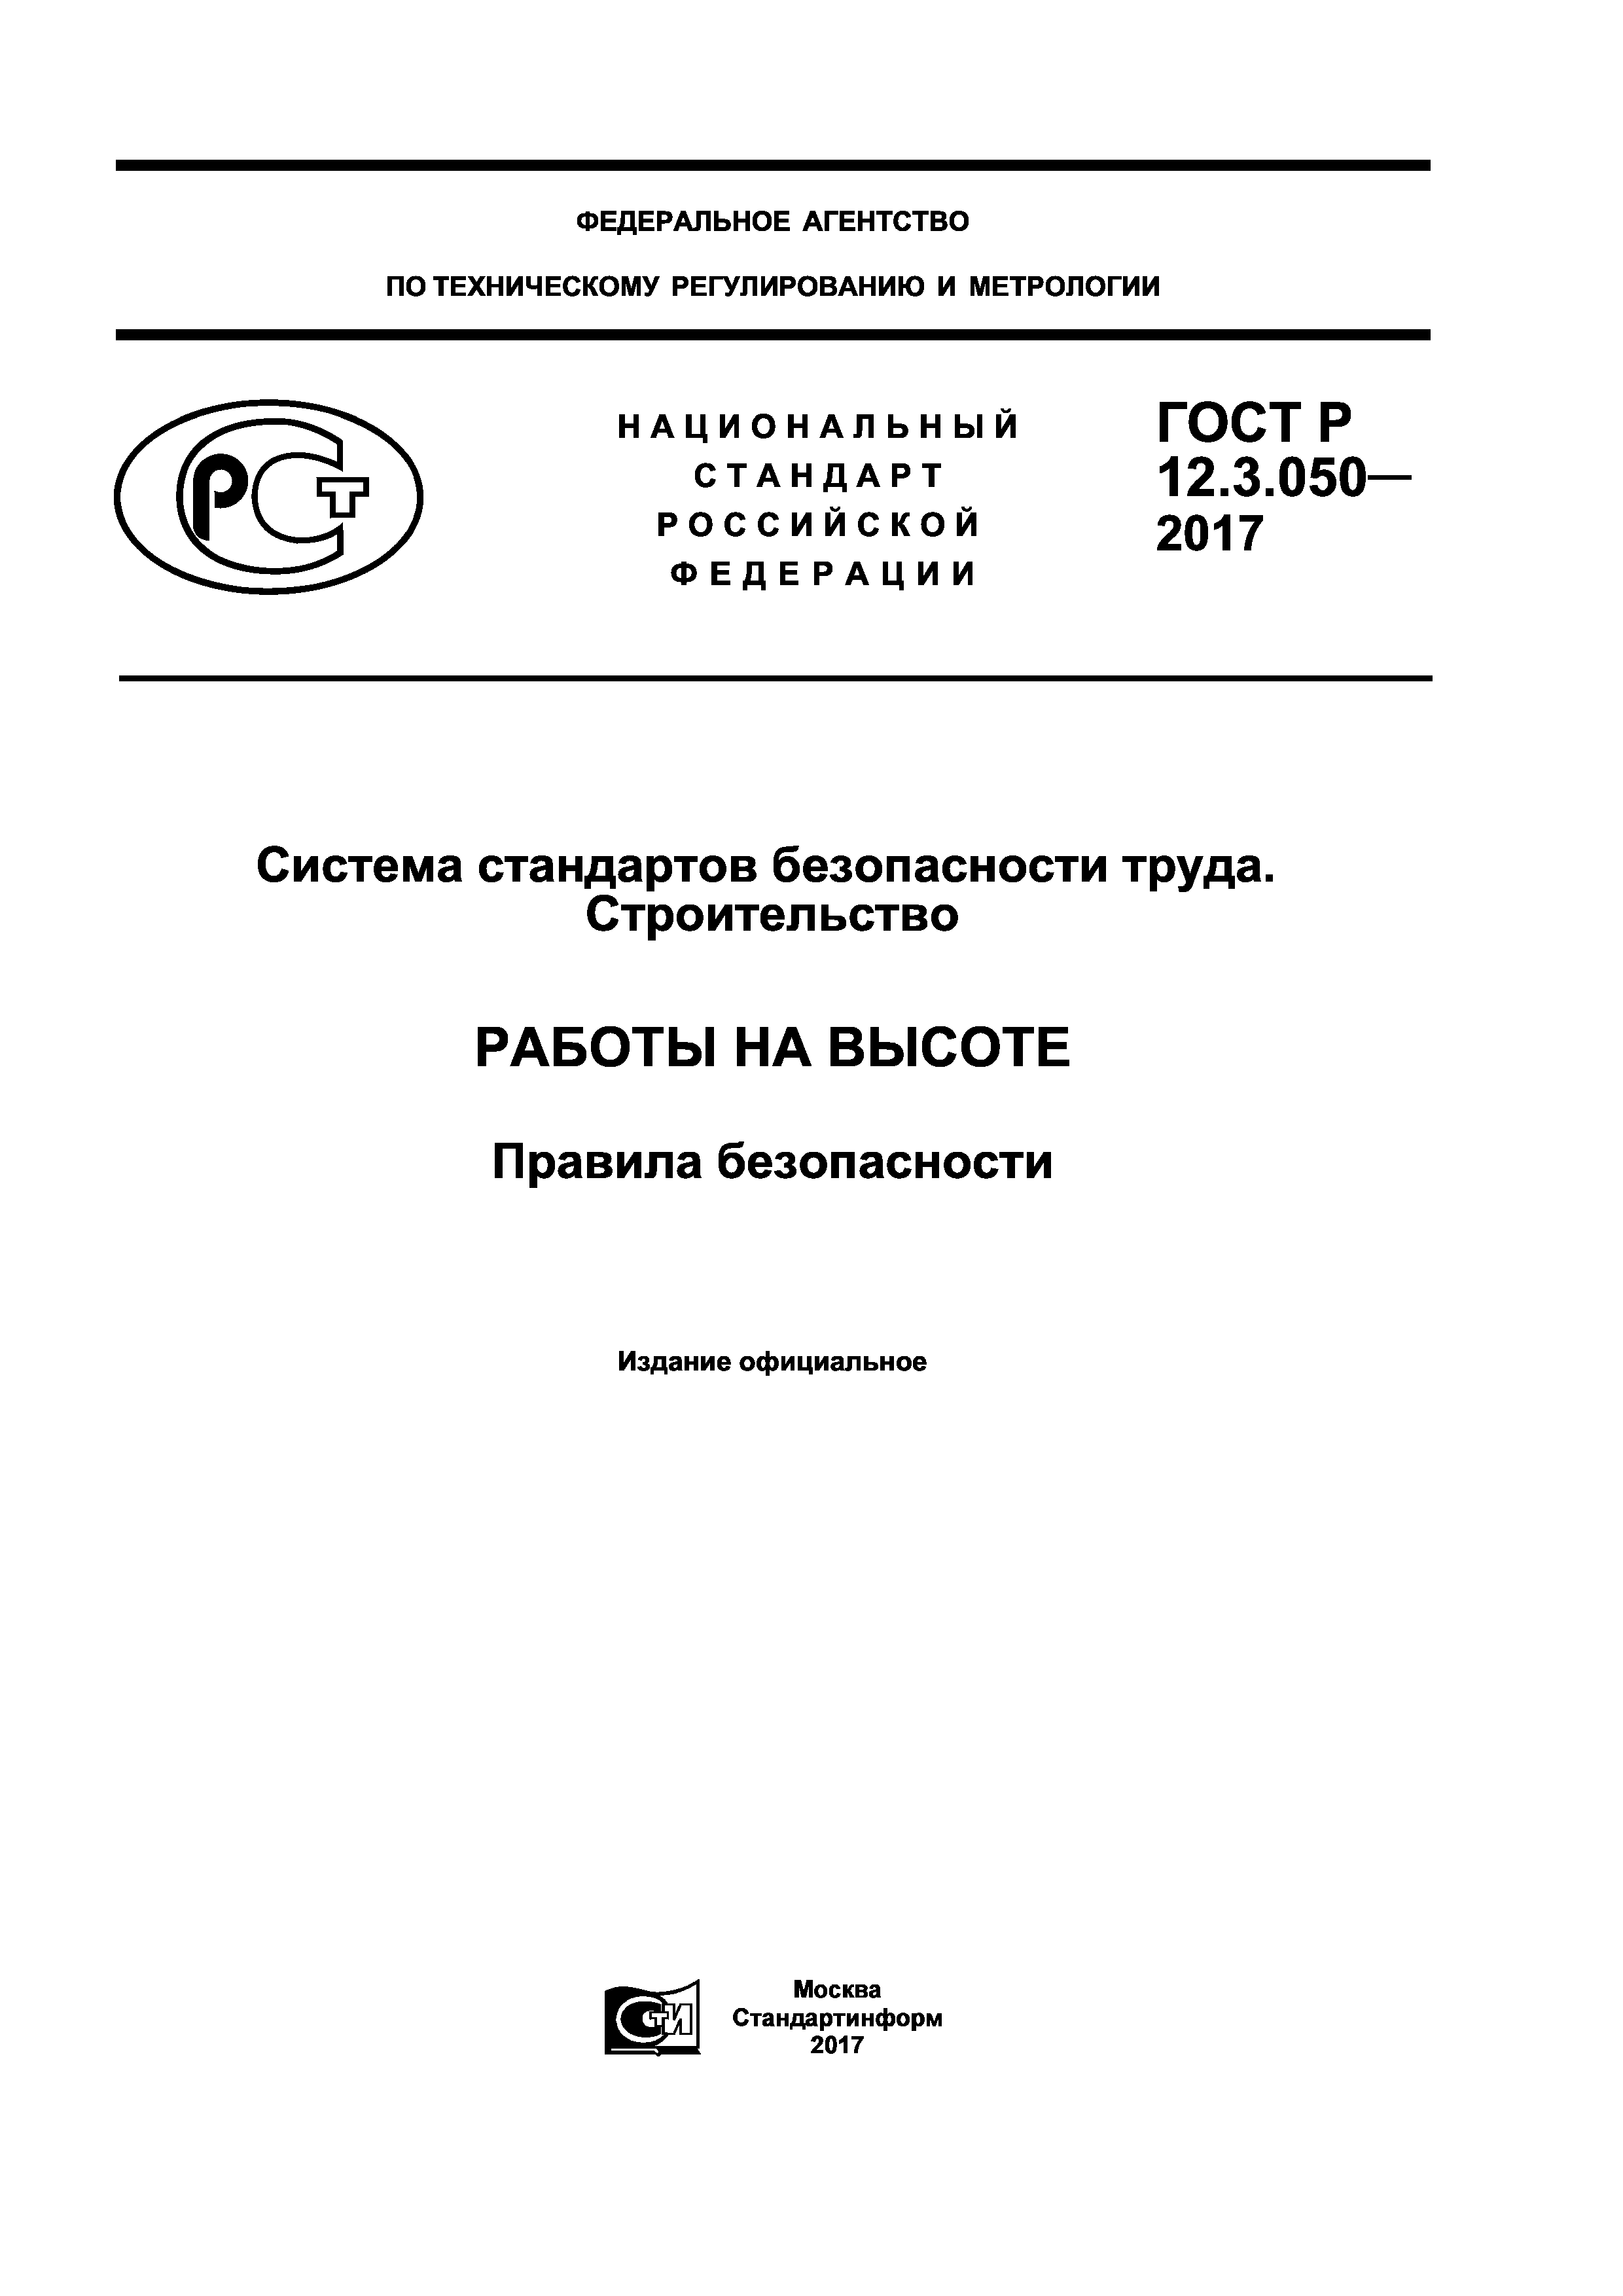 ГОСТ Р 12.3.050-2017